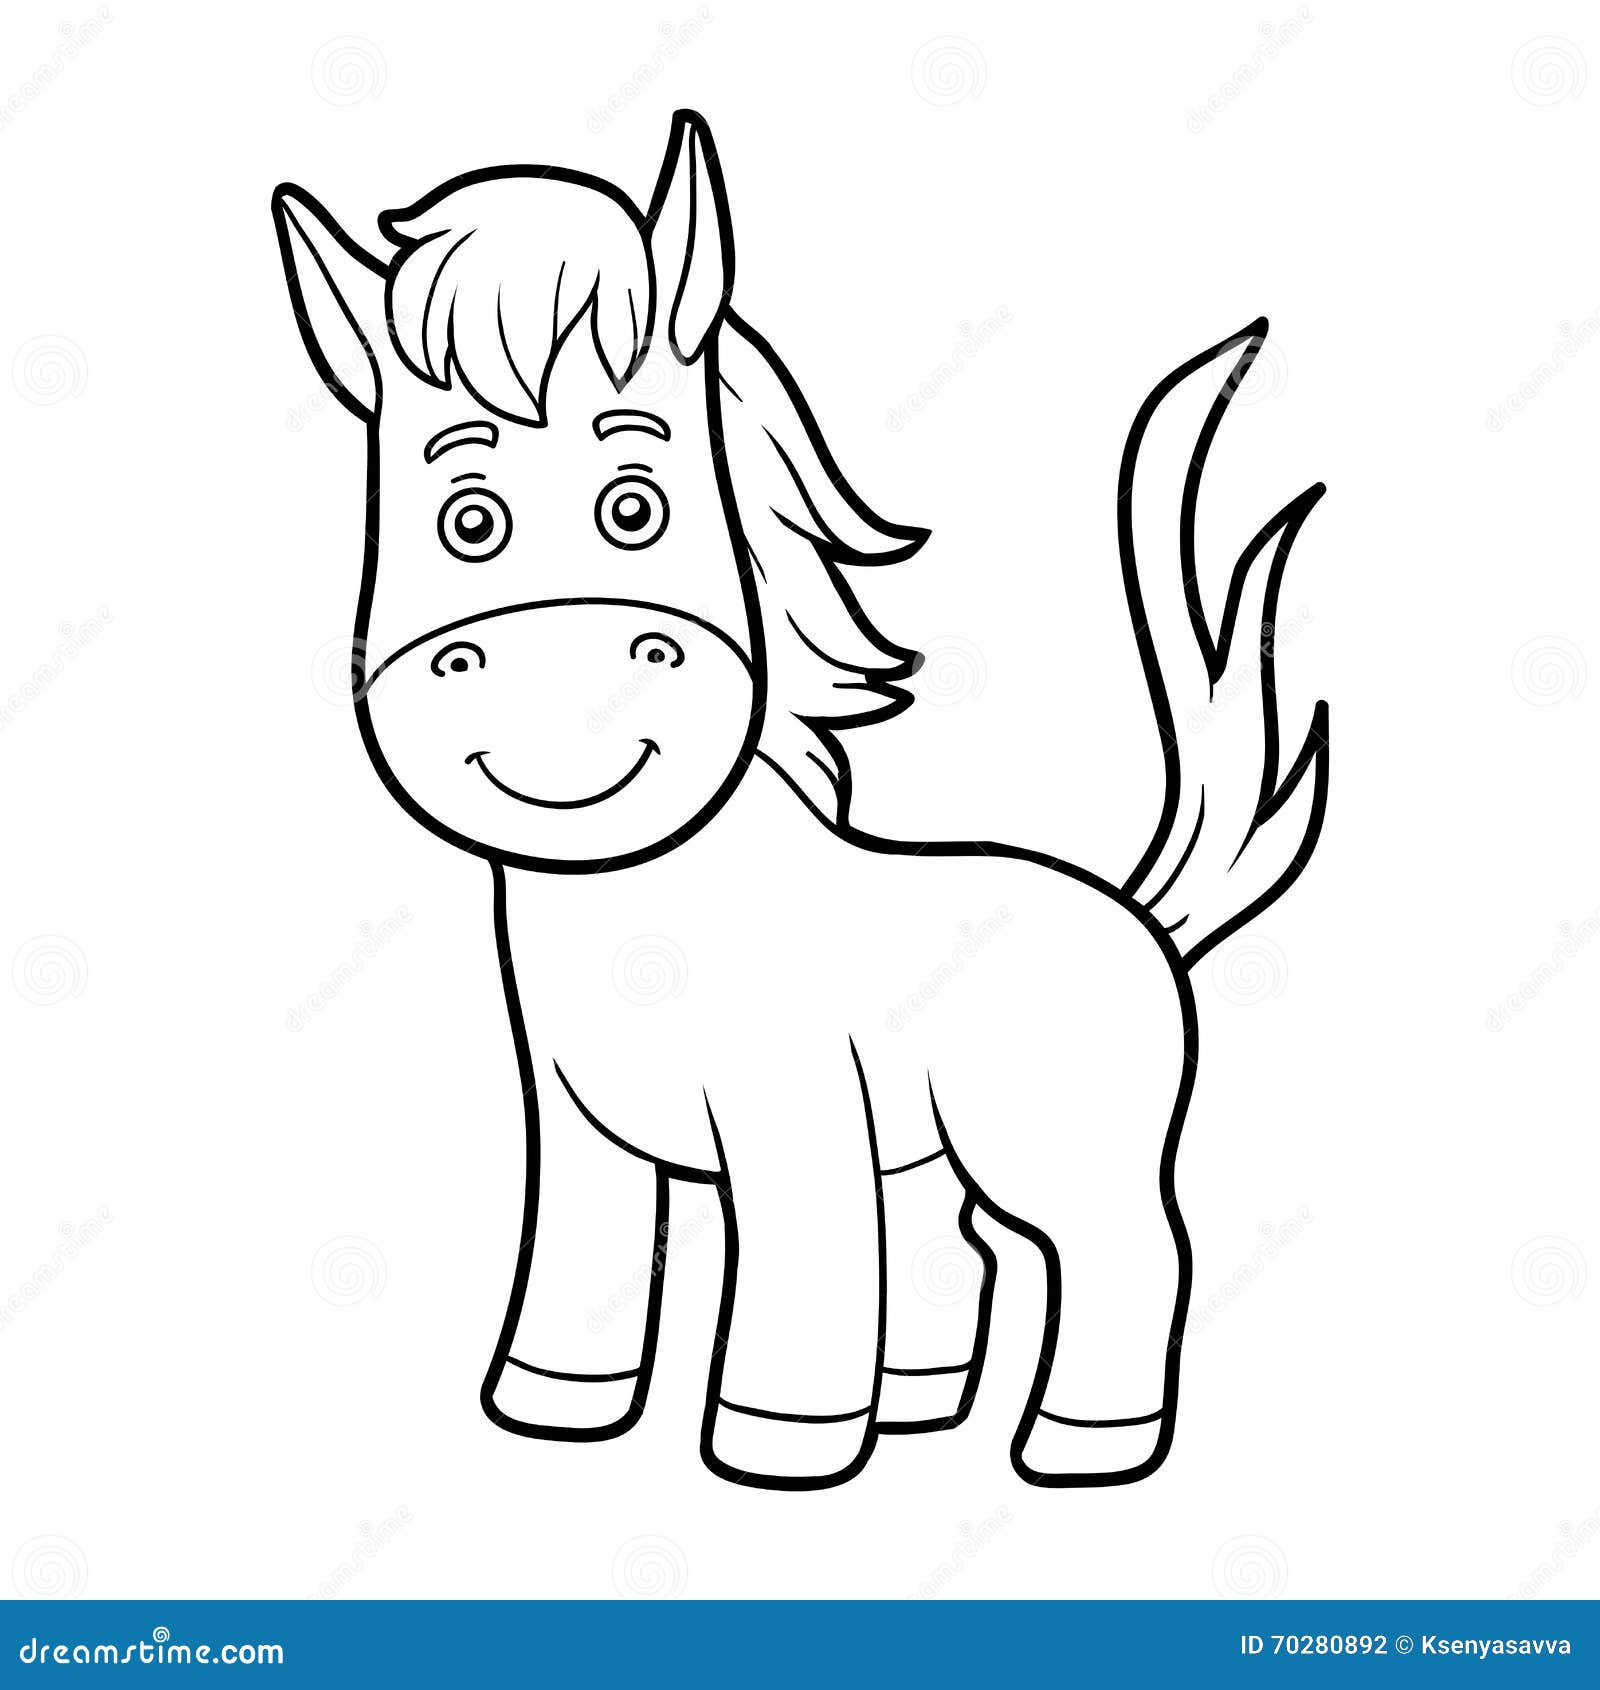 Cavalo livro de colorir – Apps no Google Play